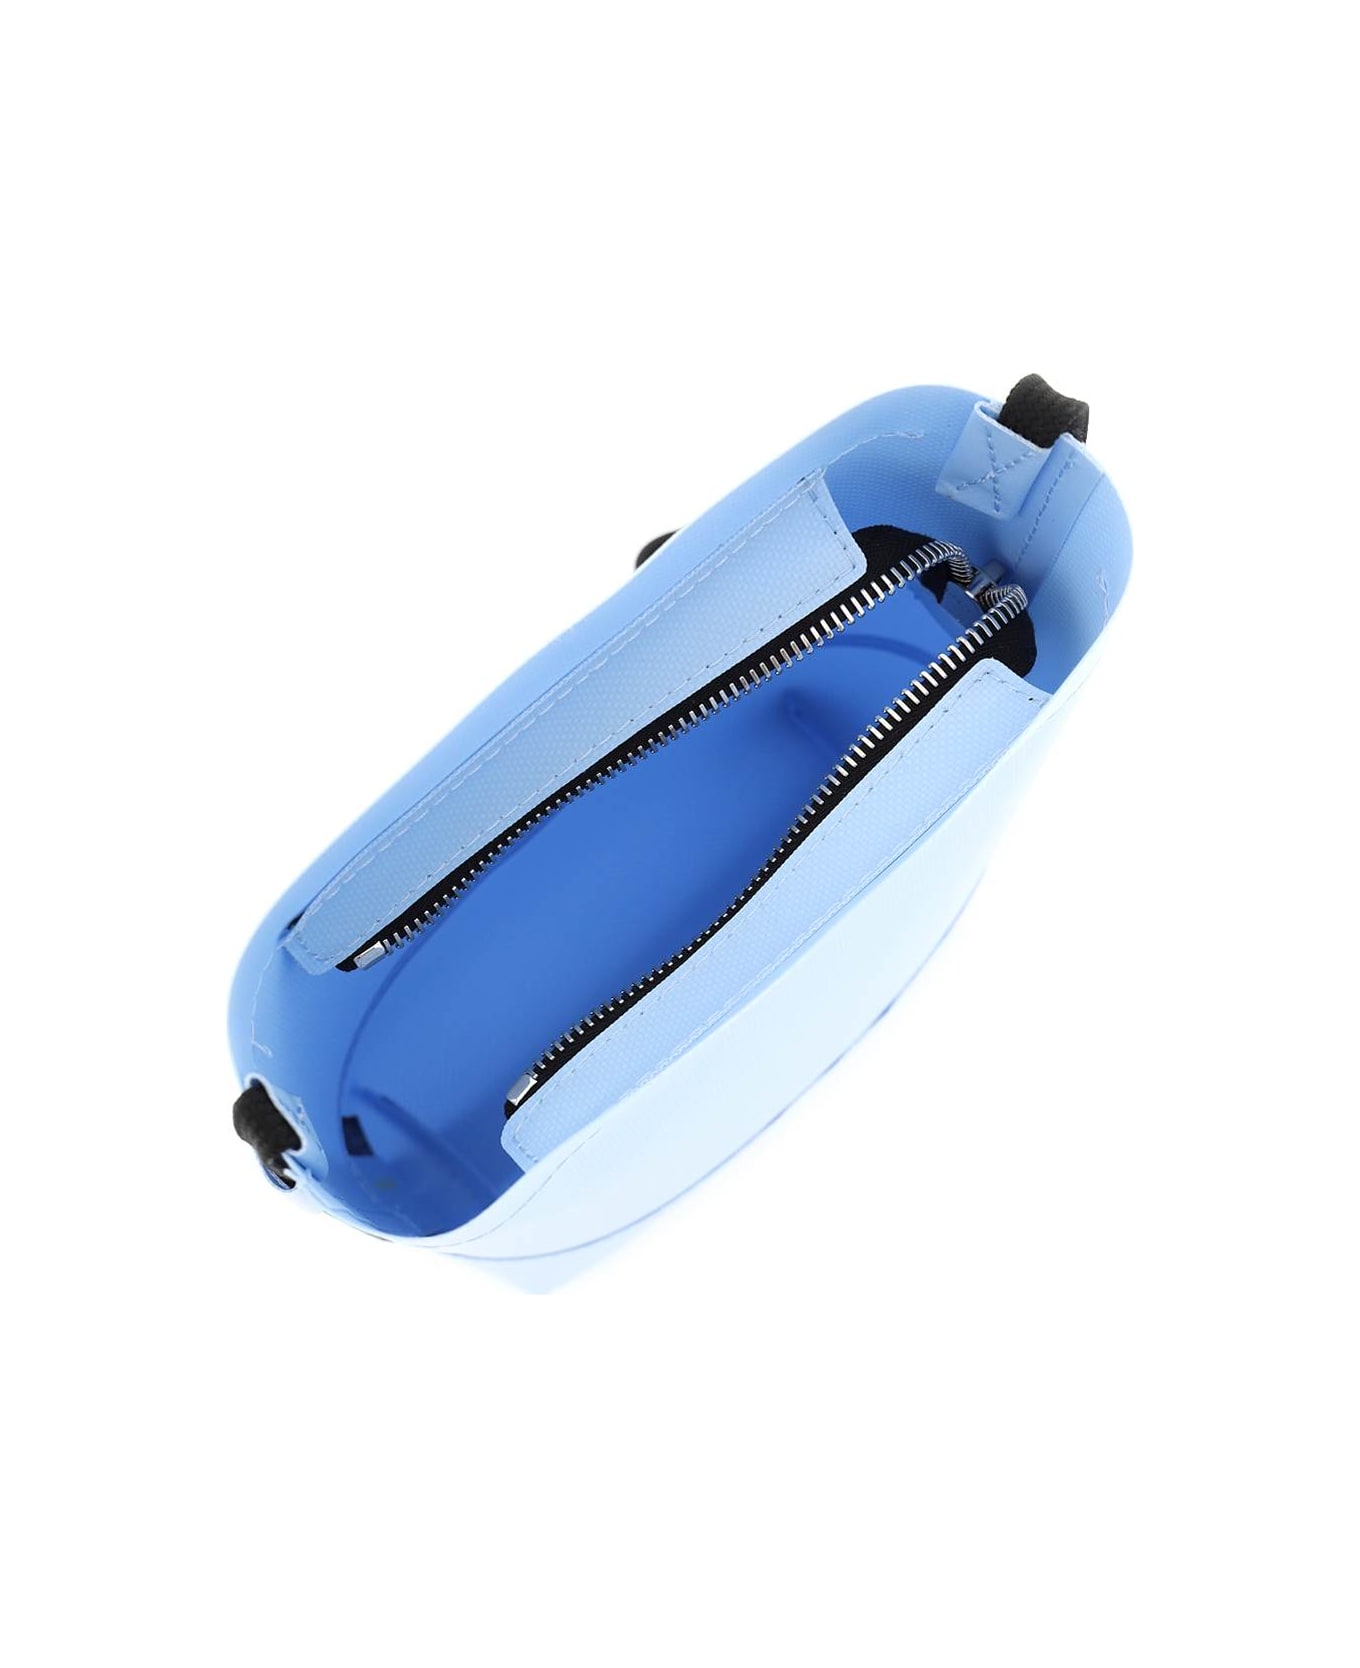 Marni Coated Canvas Crossbody Bag - LIGHT BLUE (Light blue) ショルダーバッグ